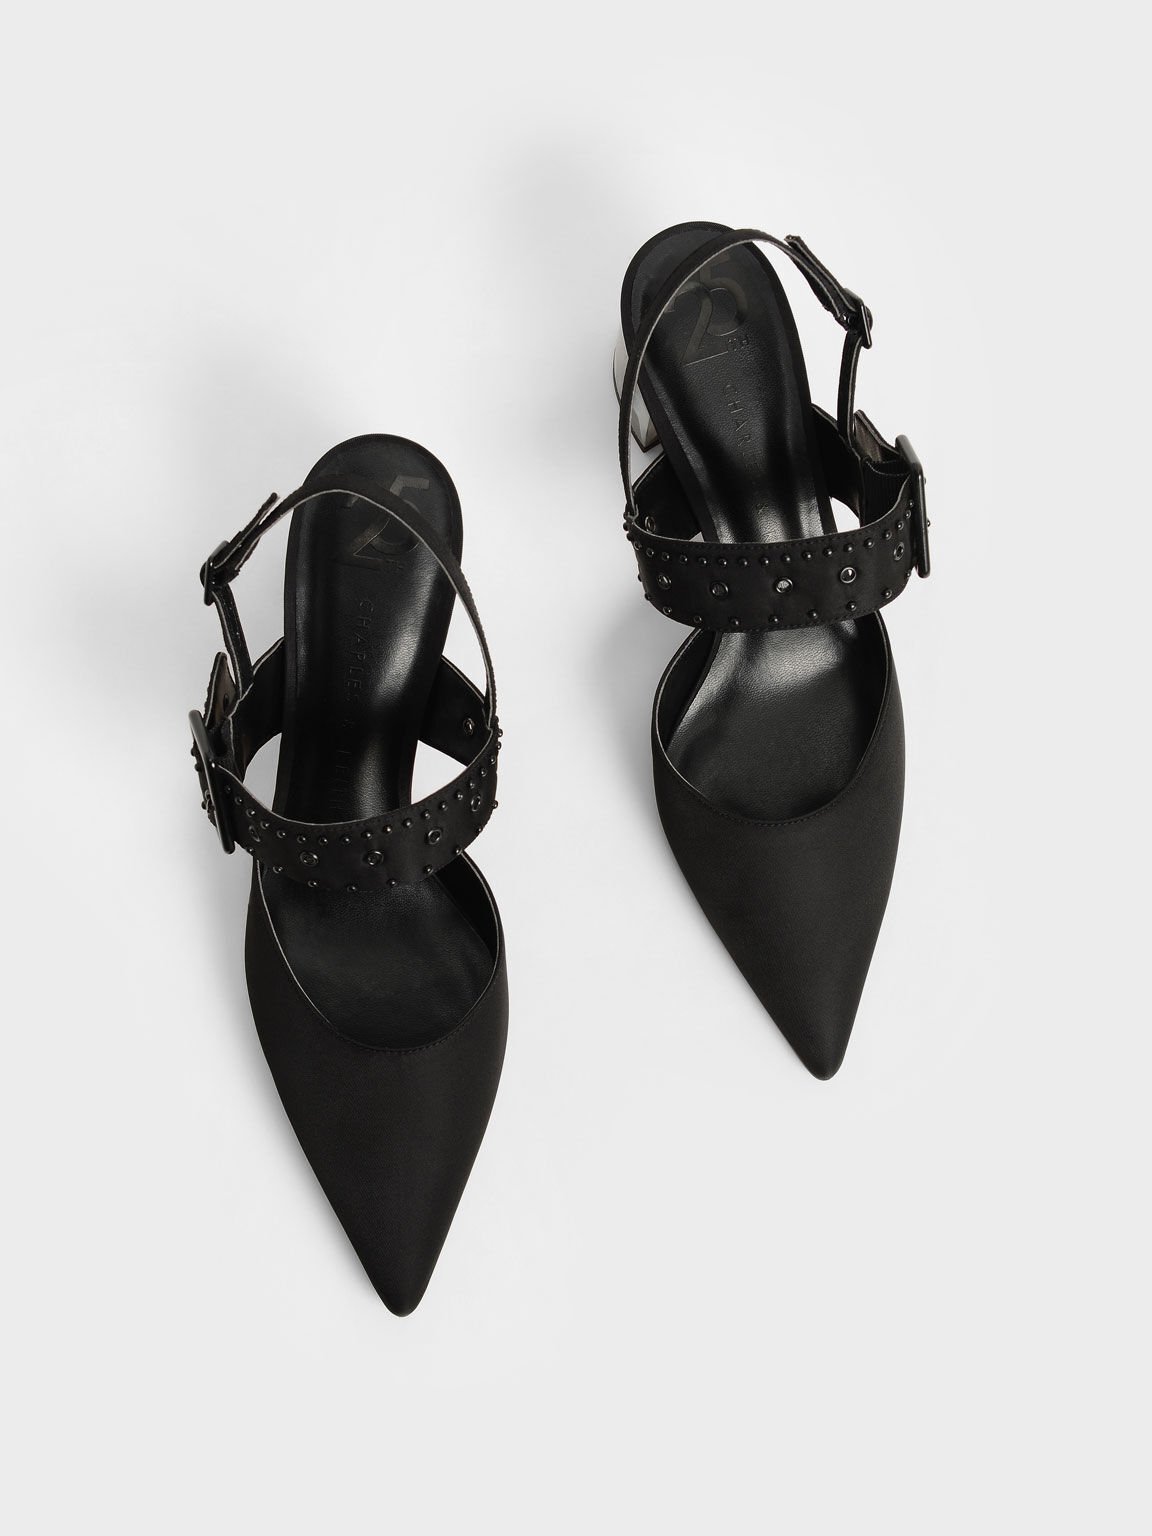 Sepphe 渲染粗跟鞋, 黑色, hi-res